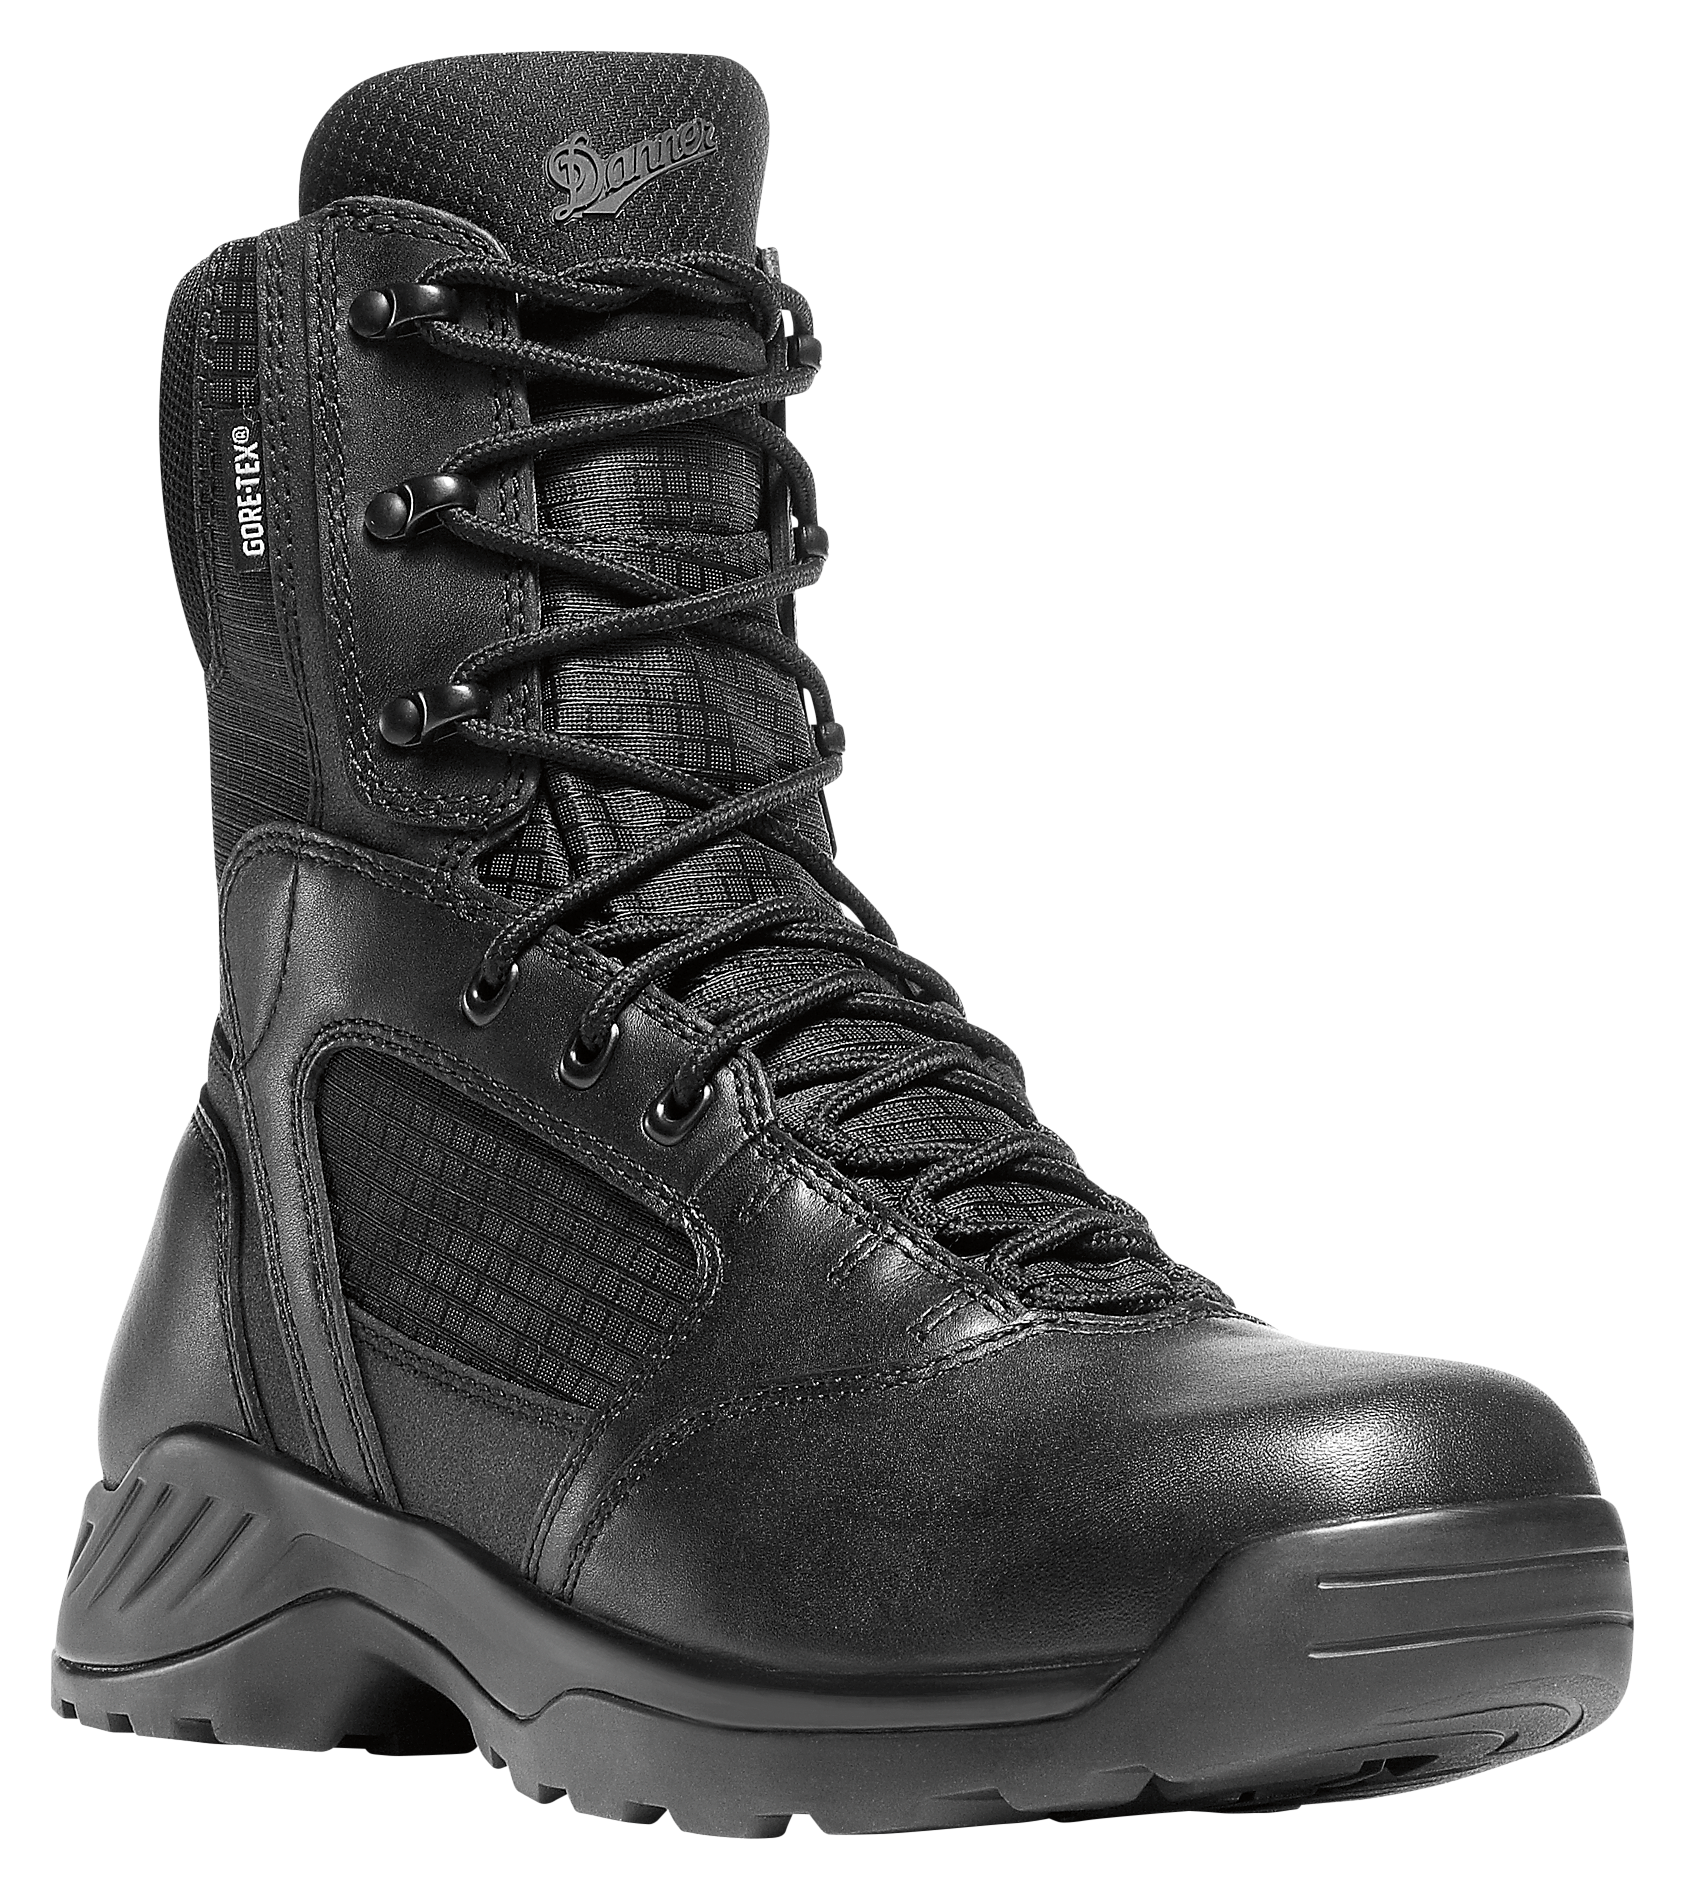 Danner Kinetic GTX Side-Zip Waterproof Tactical Duty Boots for Men - Black - 14W